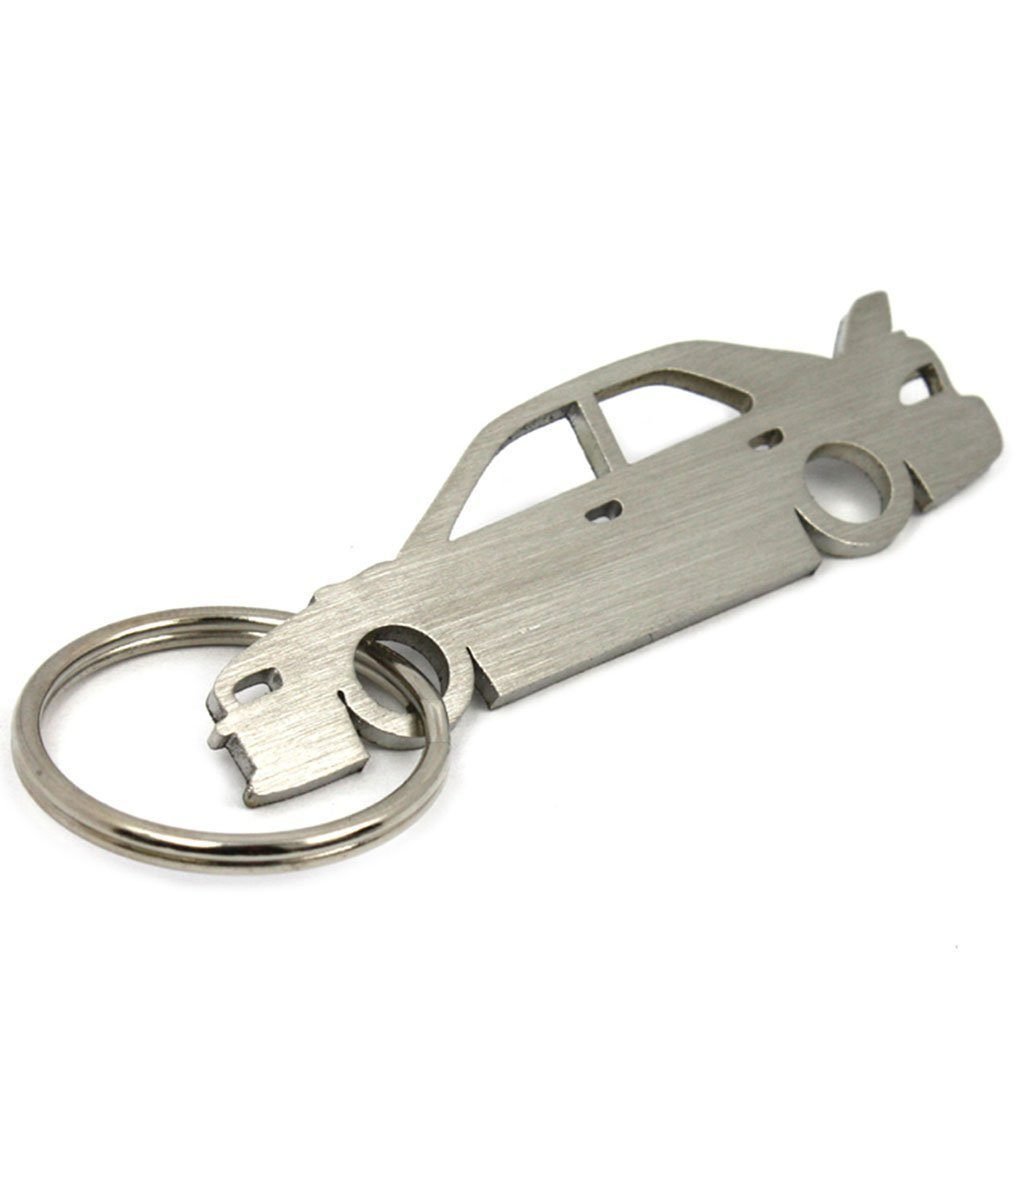 Subaru WRX GC Key Ring - Hardtuned